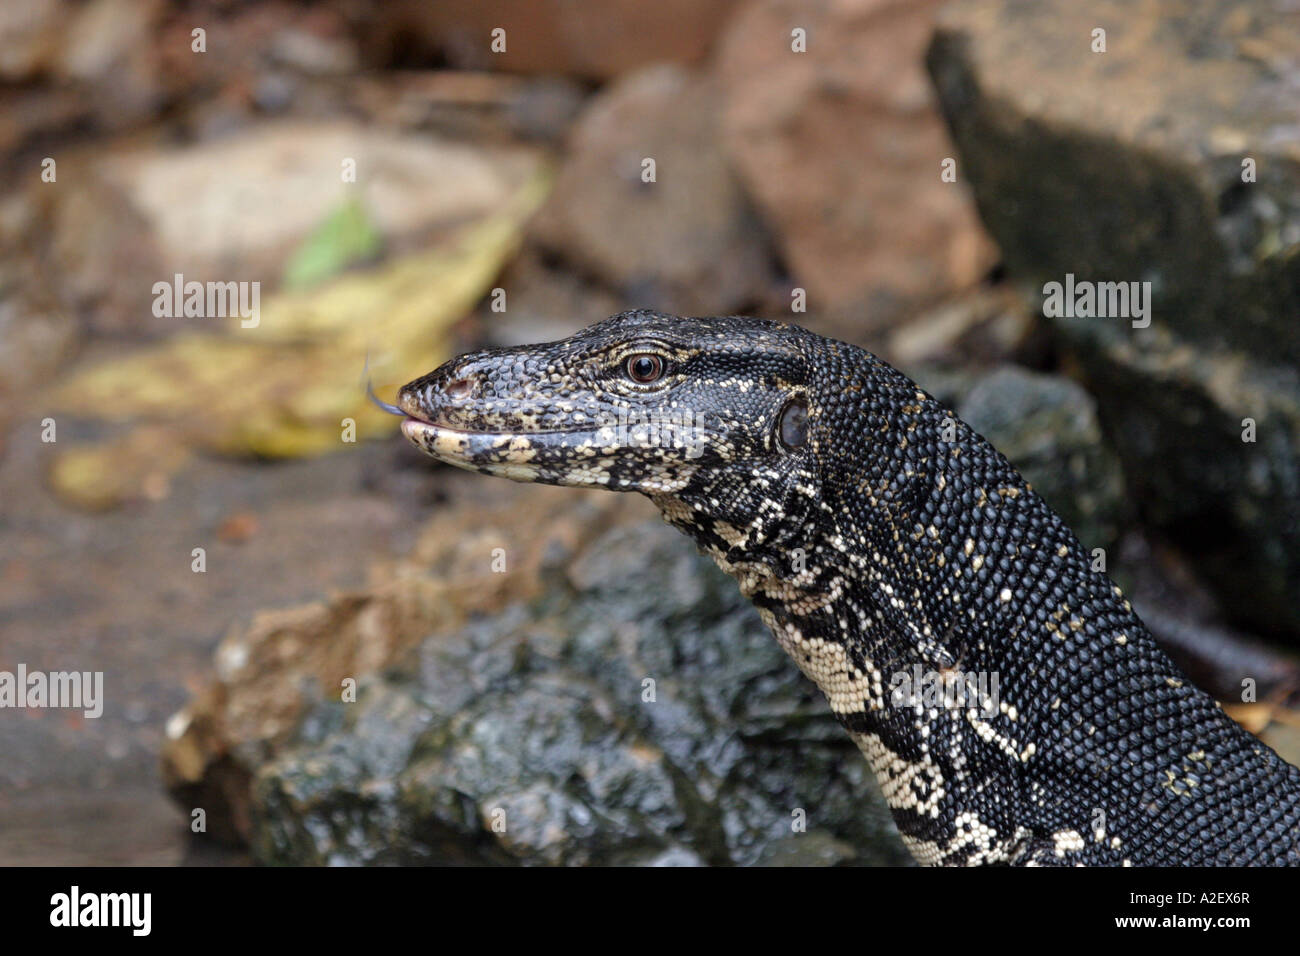 Close up of the head of a Water Monitor lizard, Varanus salvator, Sri Lanka, Asia Stock Photo